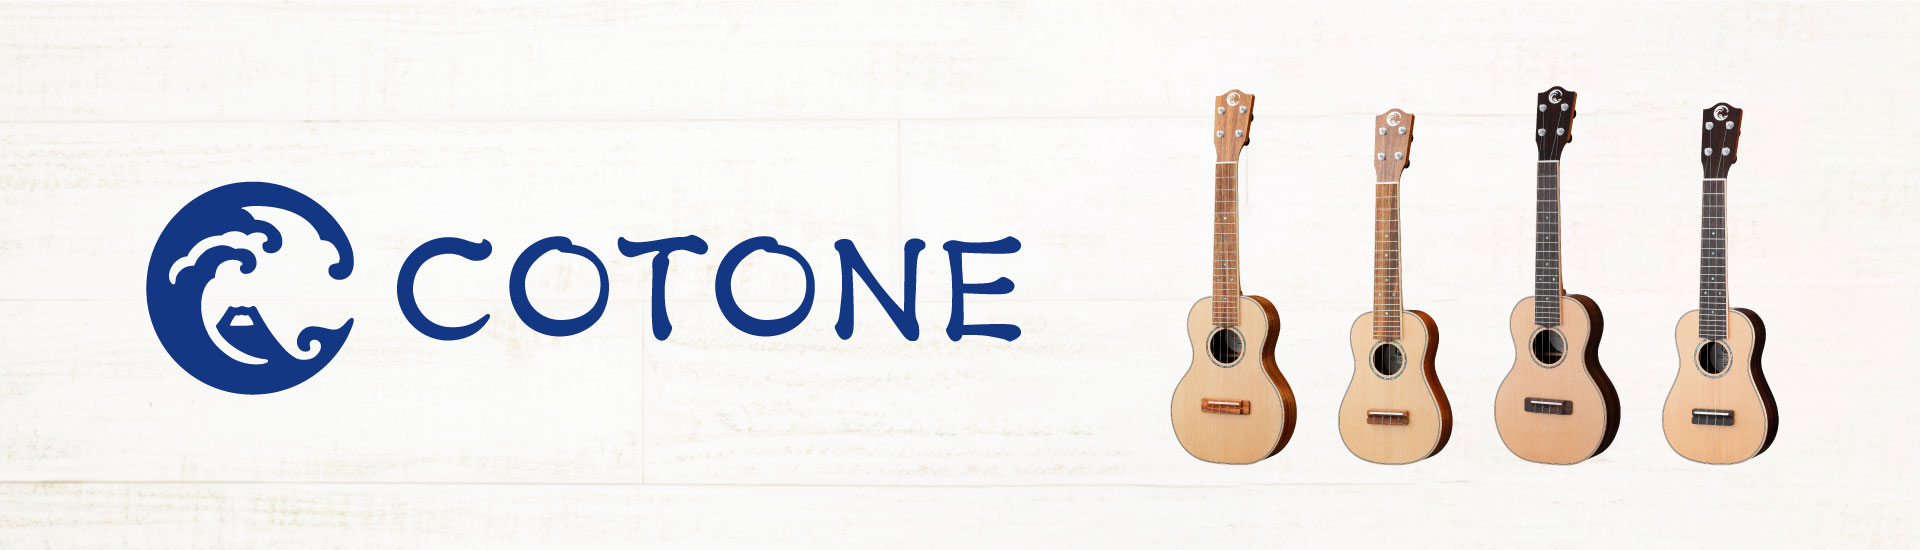 COTONE (コトネ) オリジナルブランド | 島村楽器